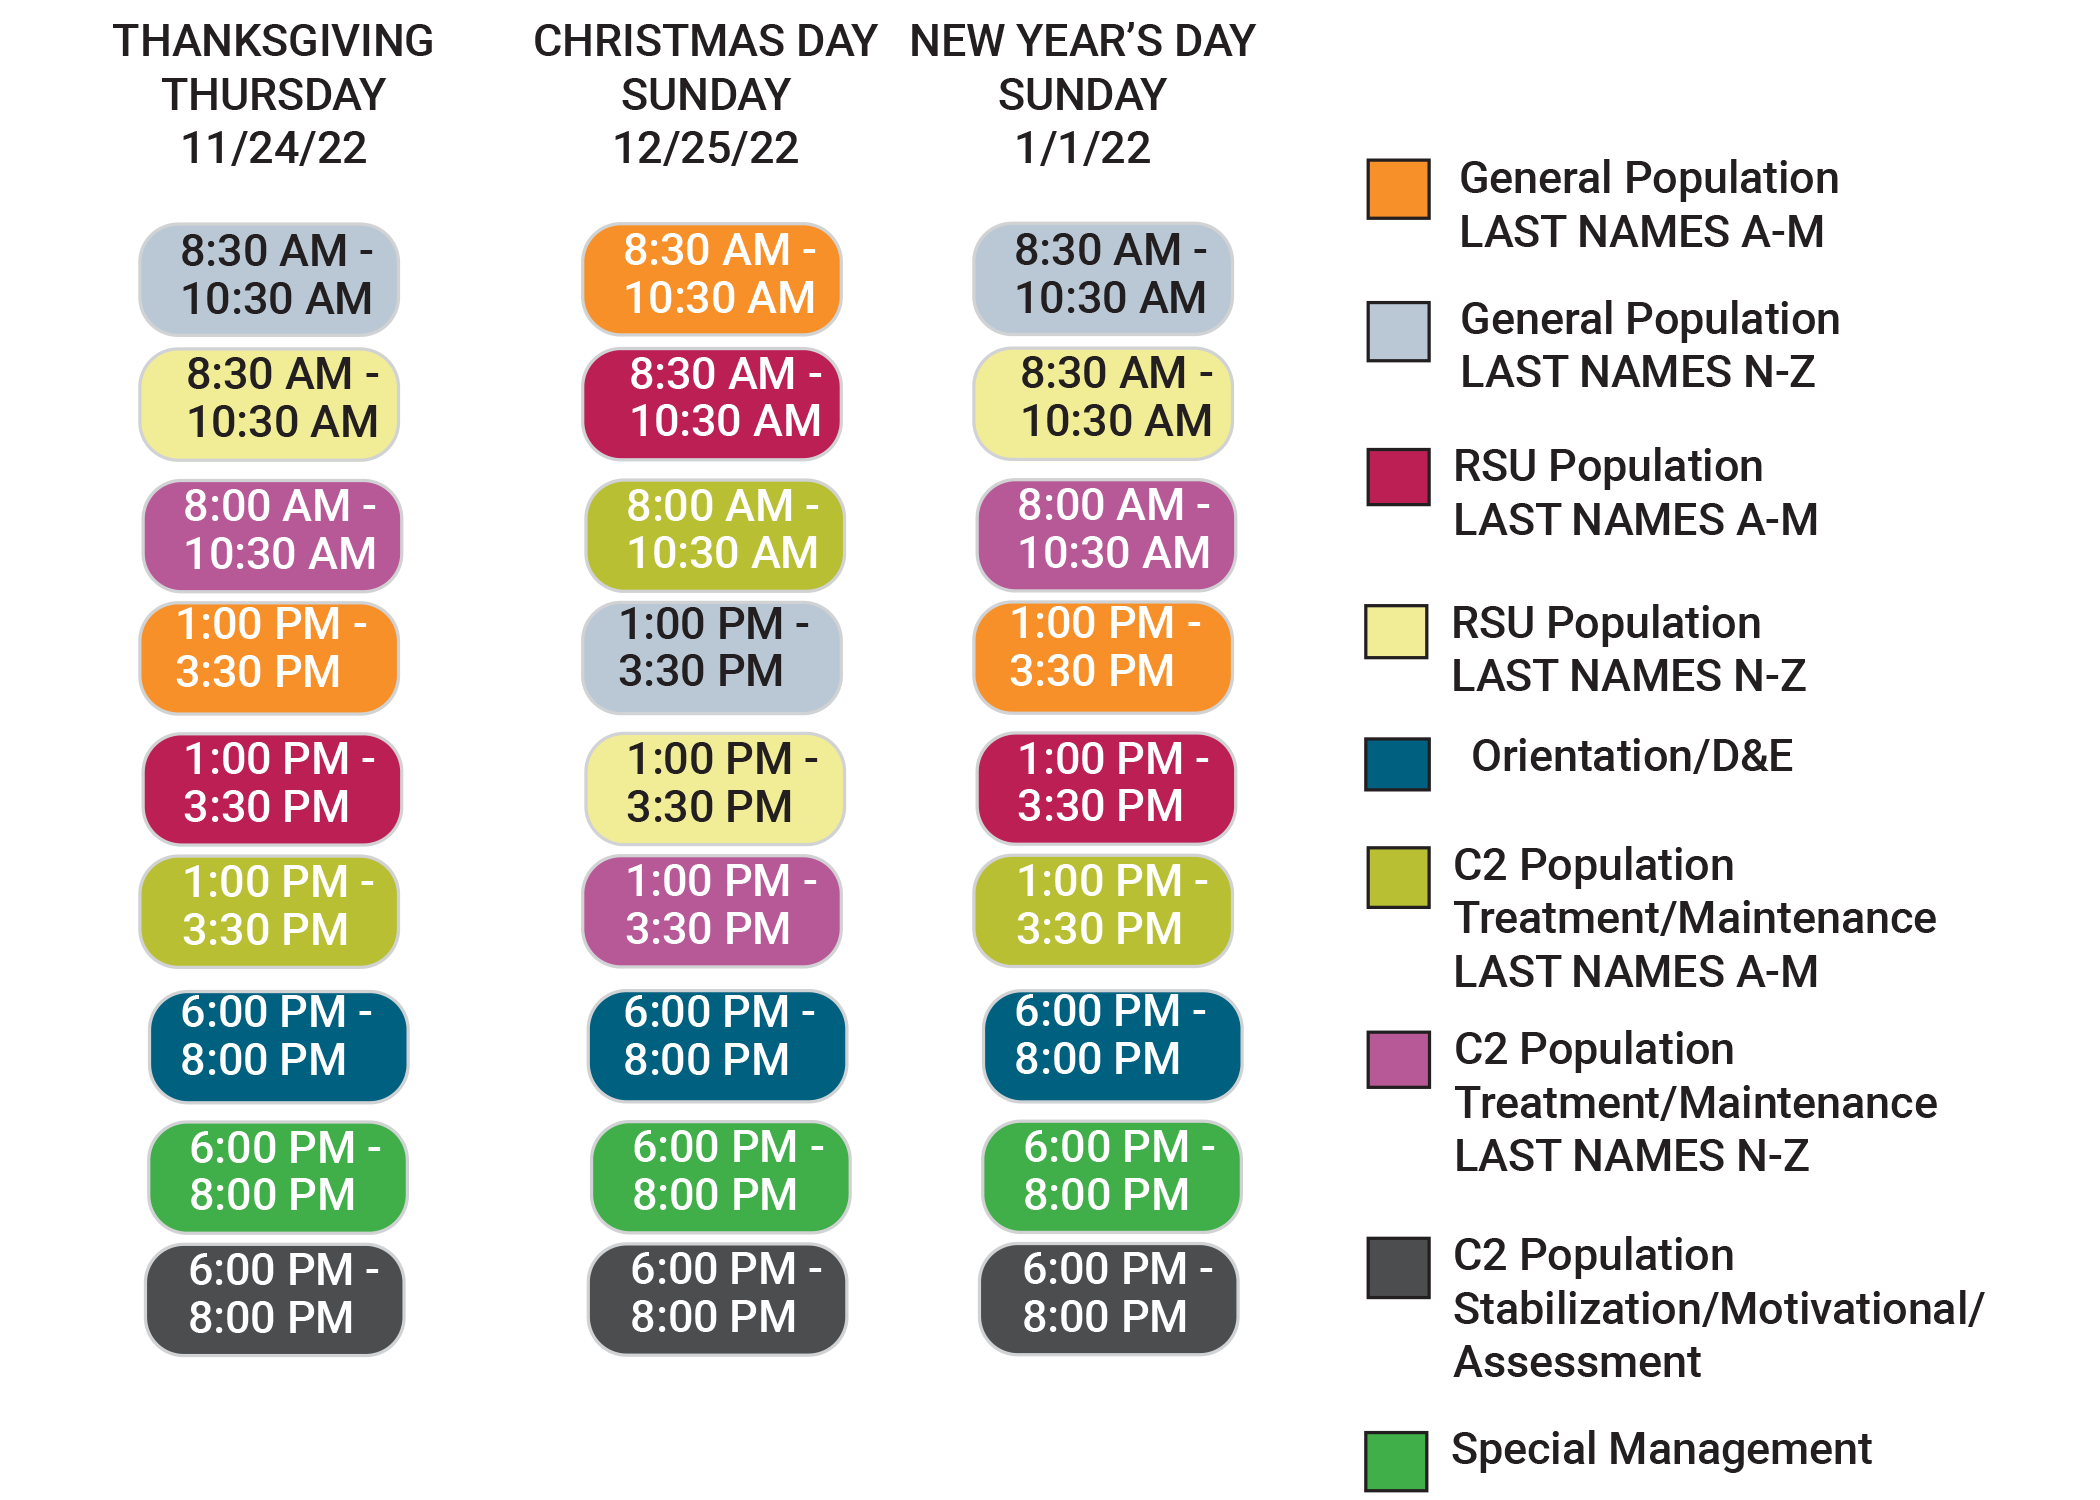 NCCW Schedule Holiday 2022 crop.png